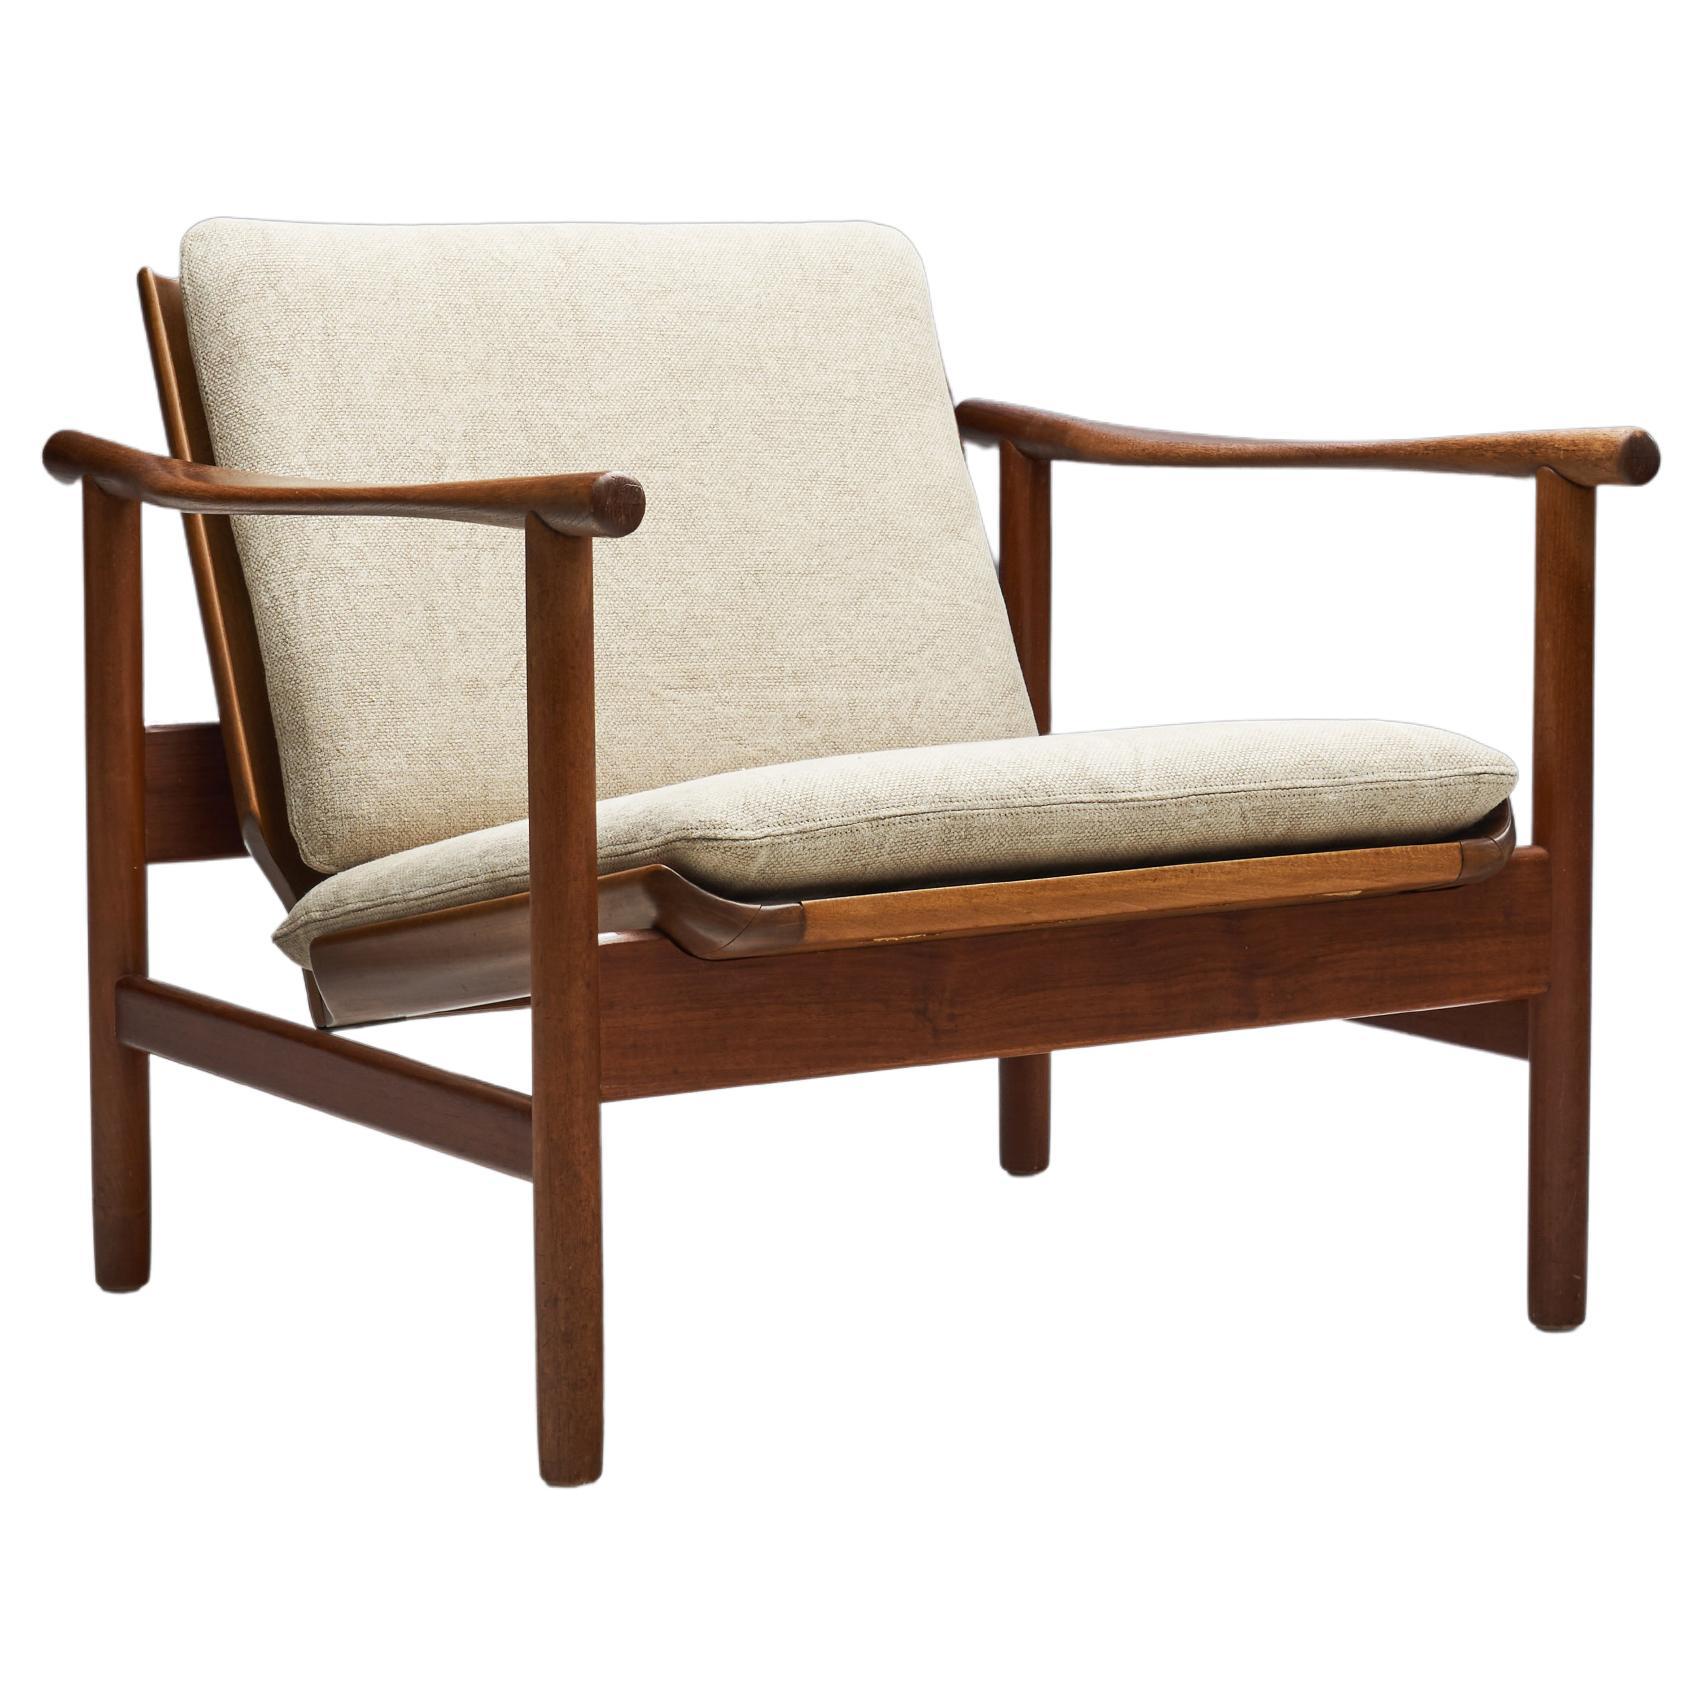 Solid Teak Danish Lounge Chair, Denmark 1950s